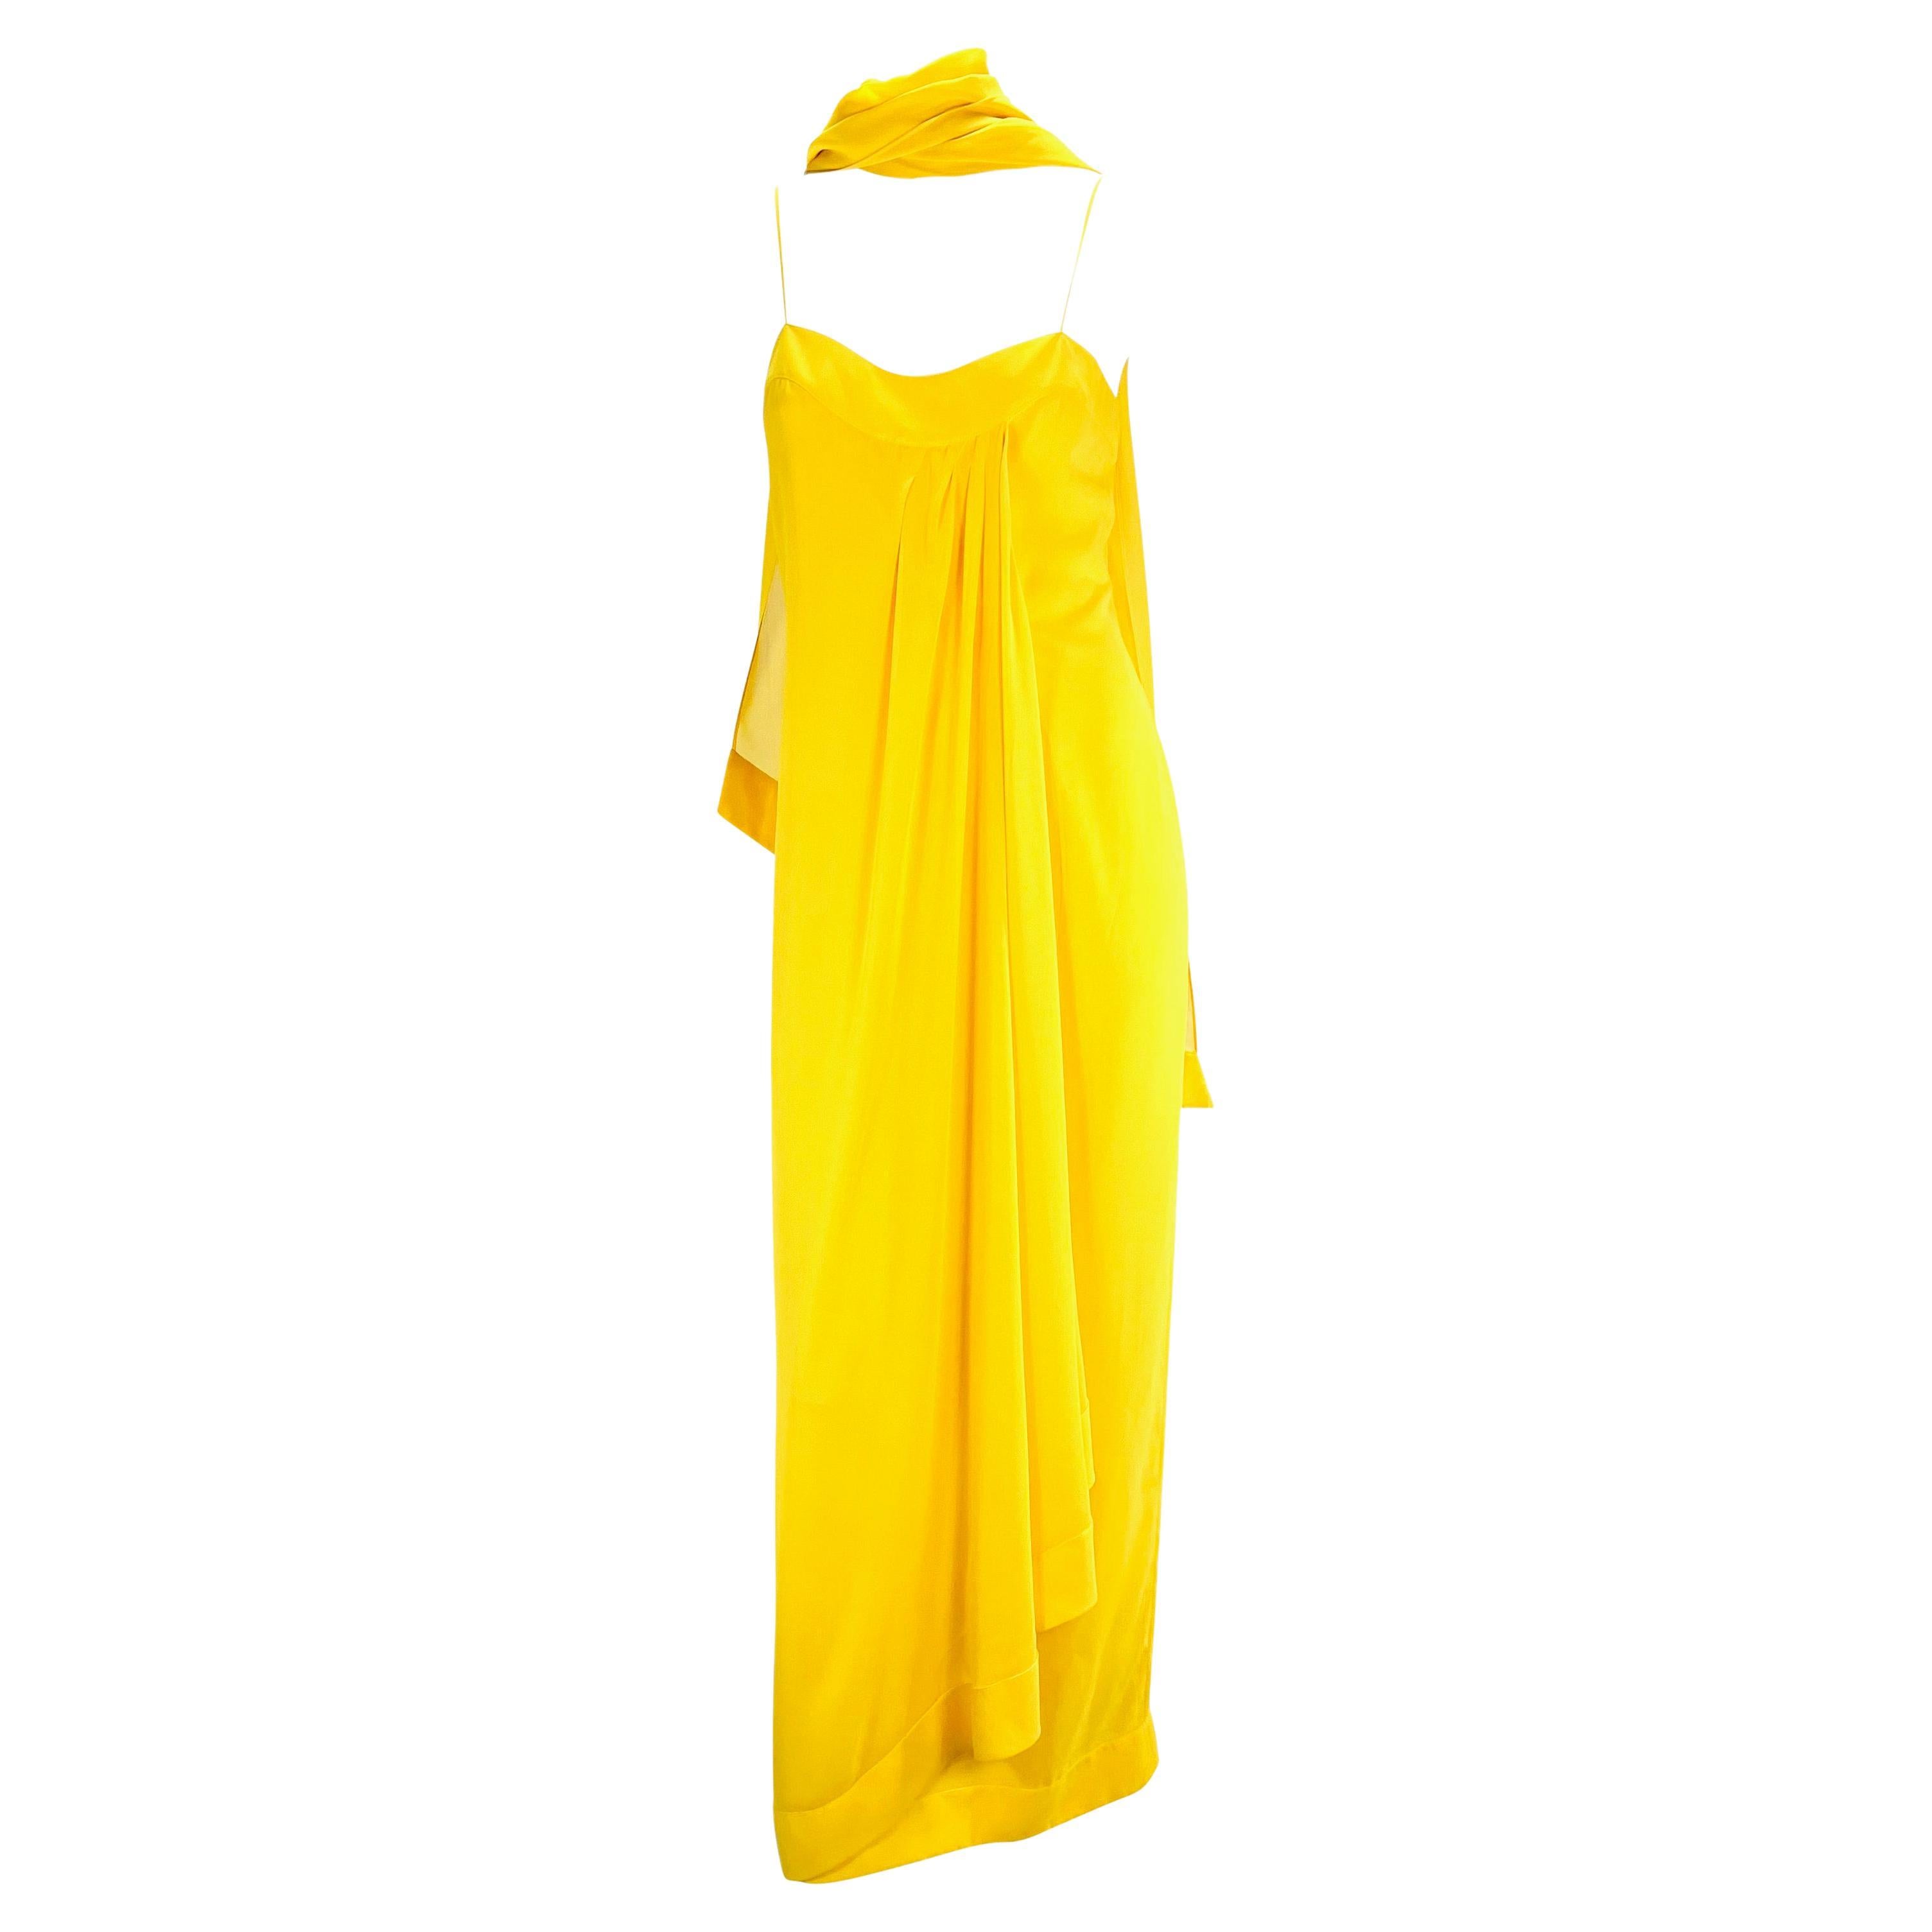 S/S 2000 Thierry Mugler Canary Yellow Chiffon Dress with Matching Shawl For Sale 3